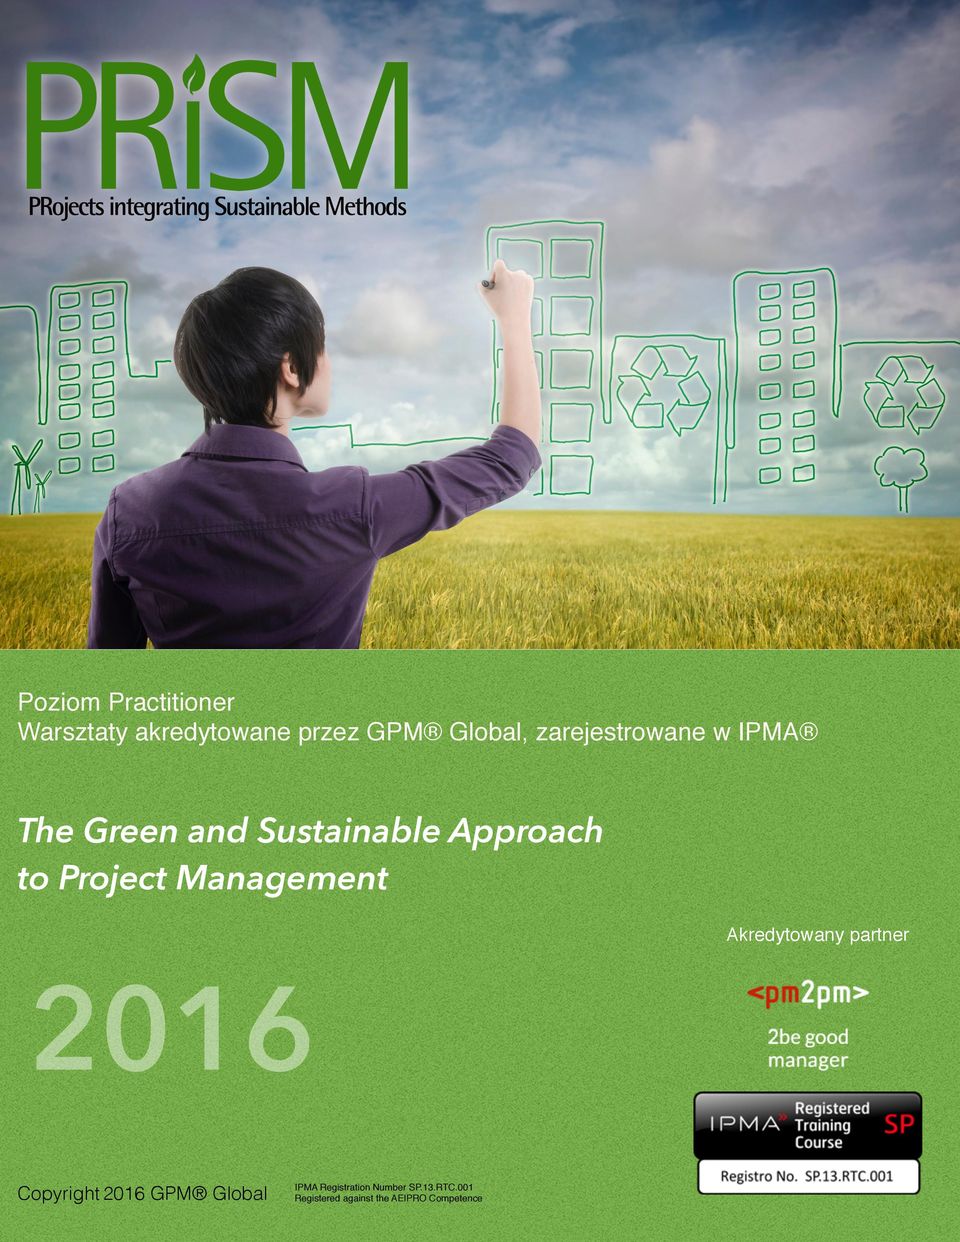 Management Akredytowany partner 2016 Copyright 2016 GPM Global IPMA